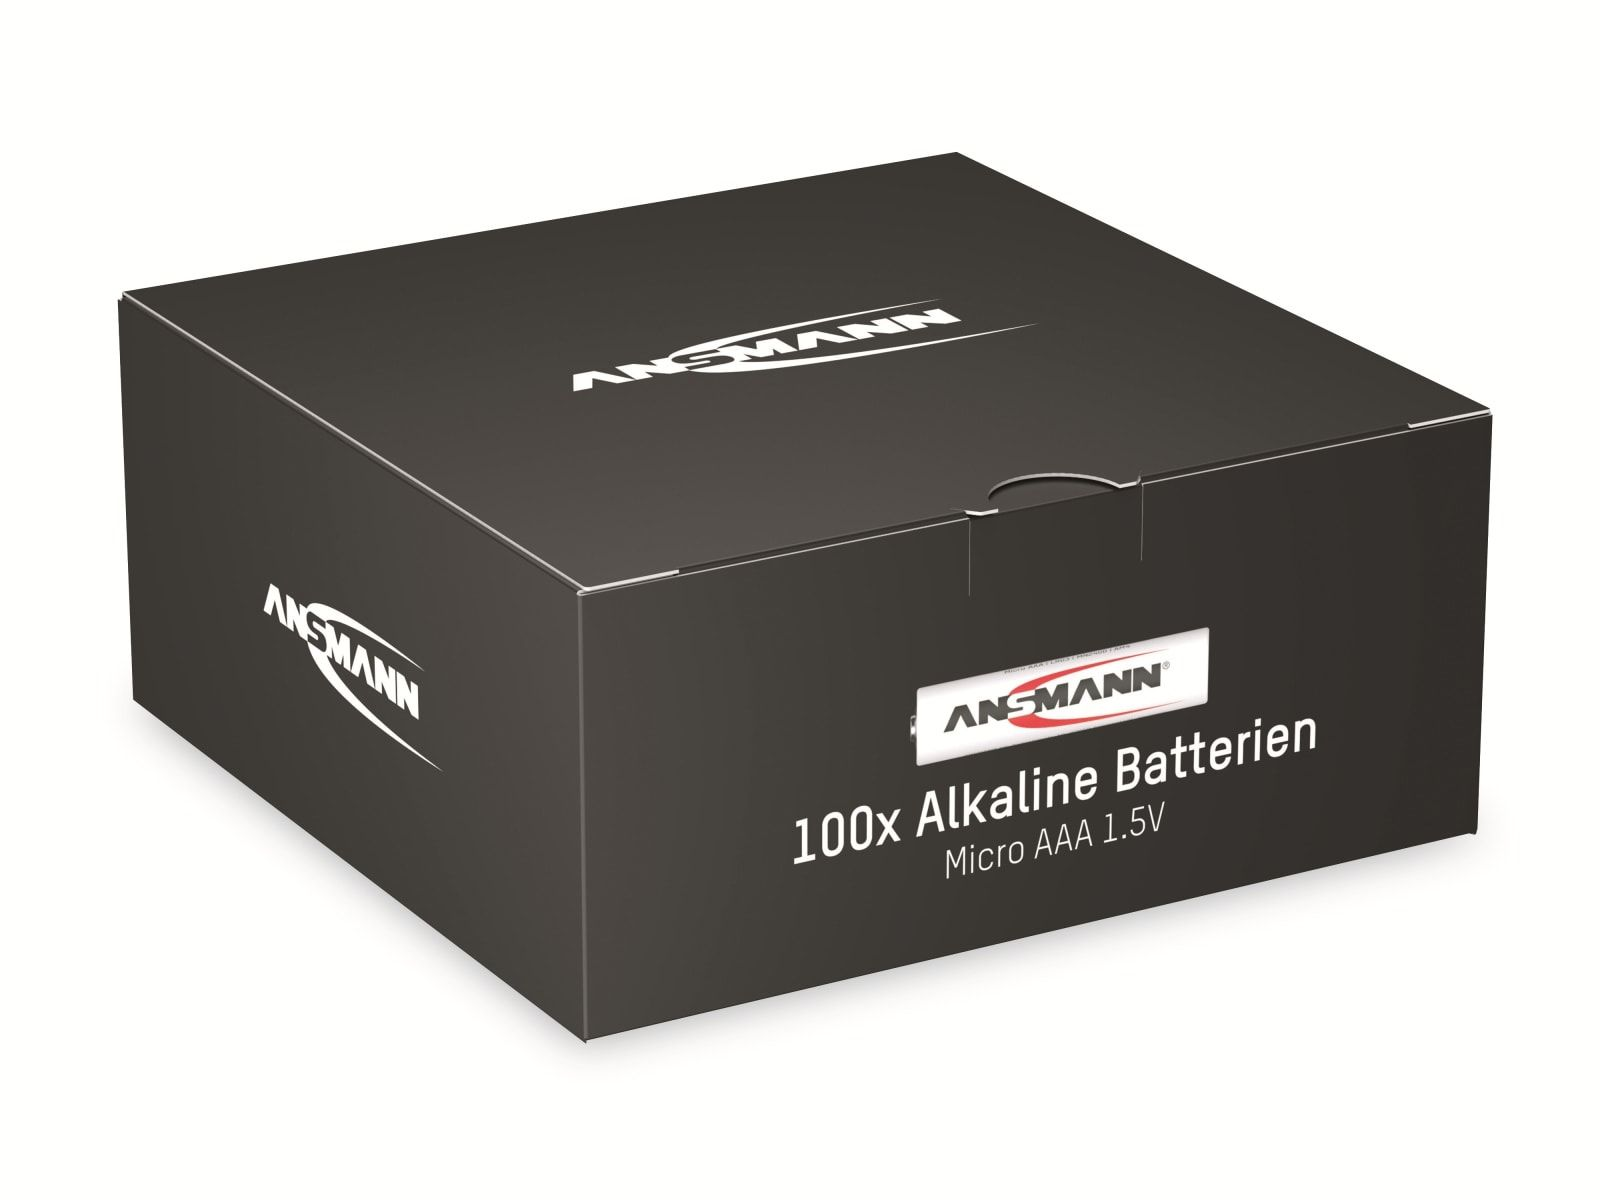 ANSMANN Micro-Batterie-Set, Alkaline, 100 Stück Alkaline Batterien